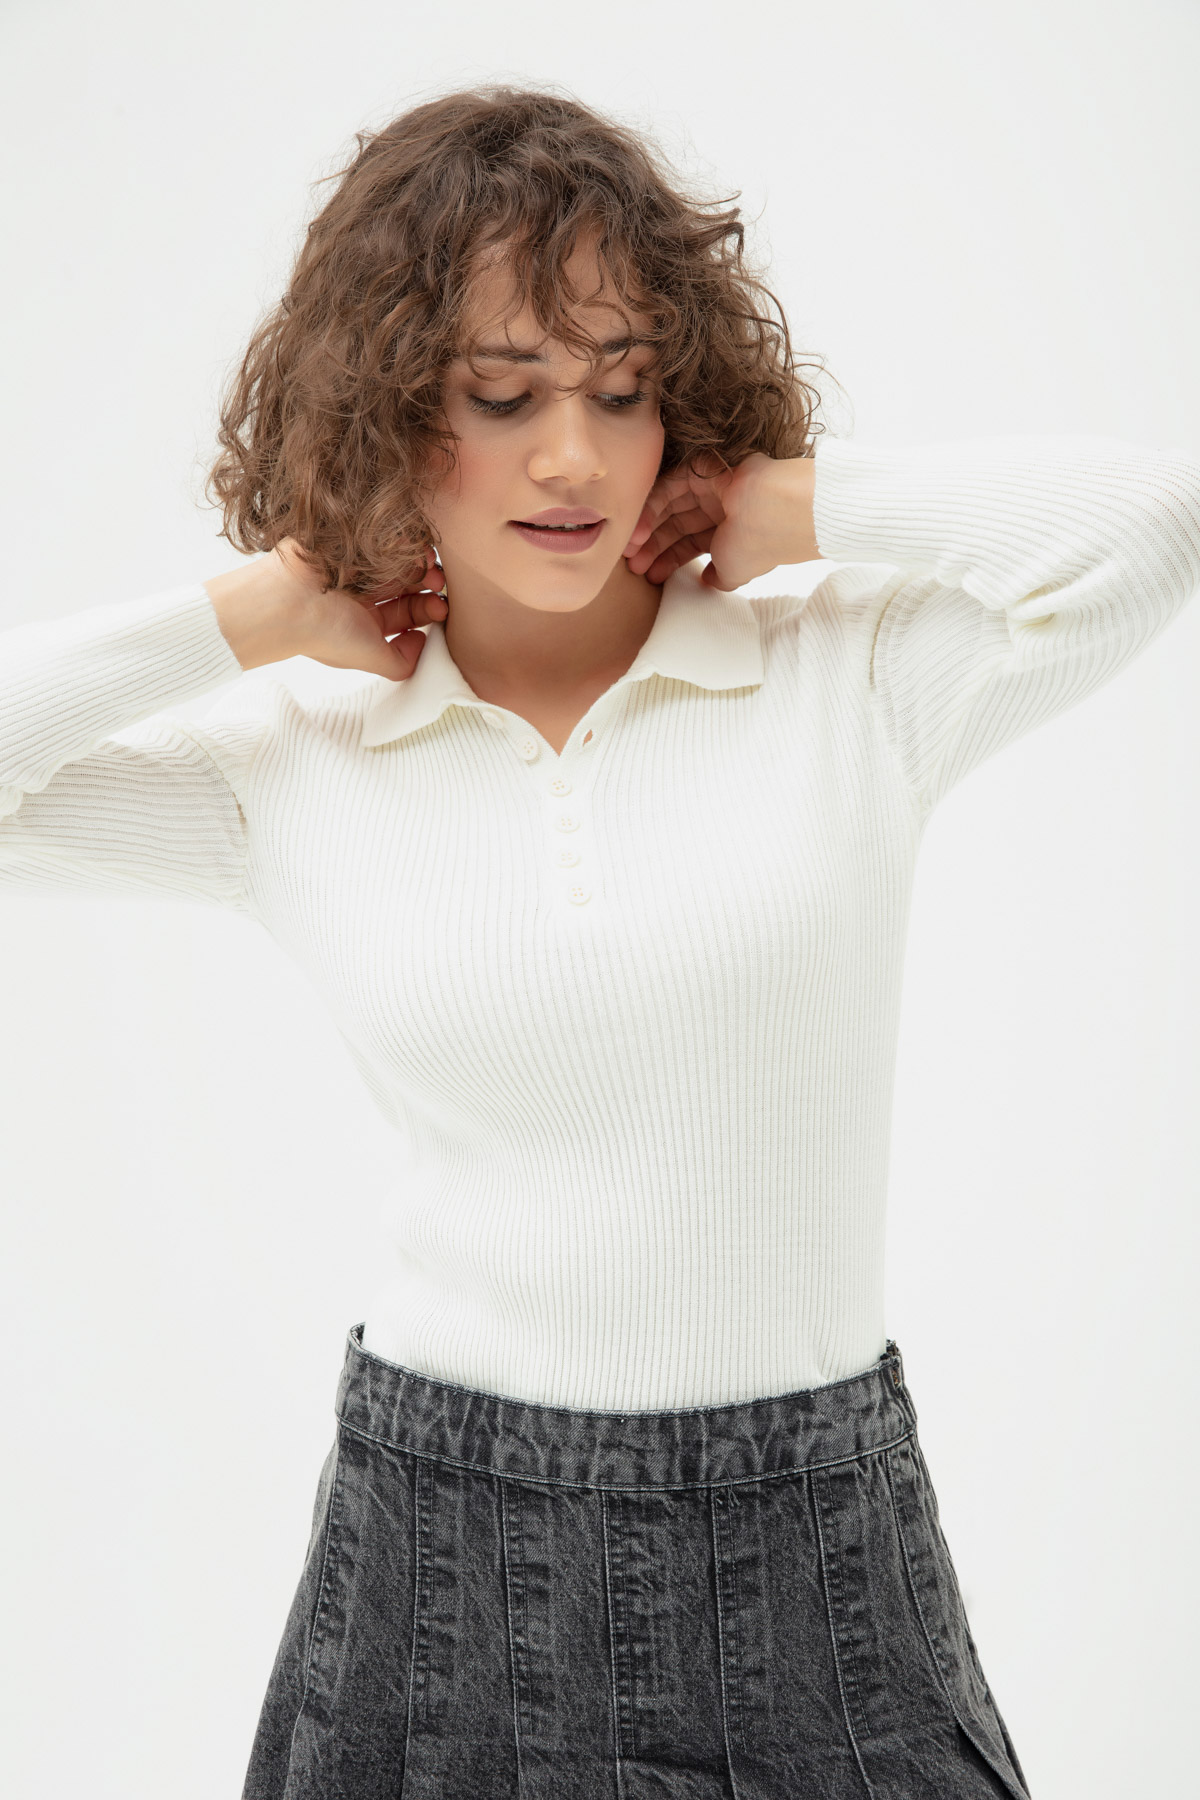 Women's White Polo Neck Knitwear Sweater